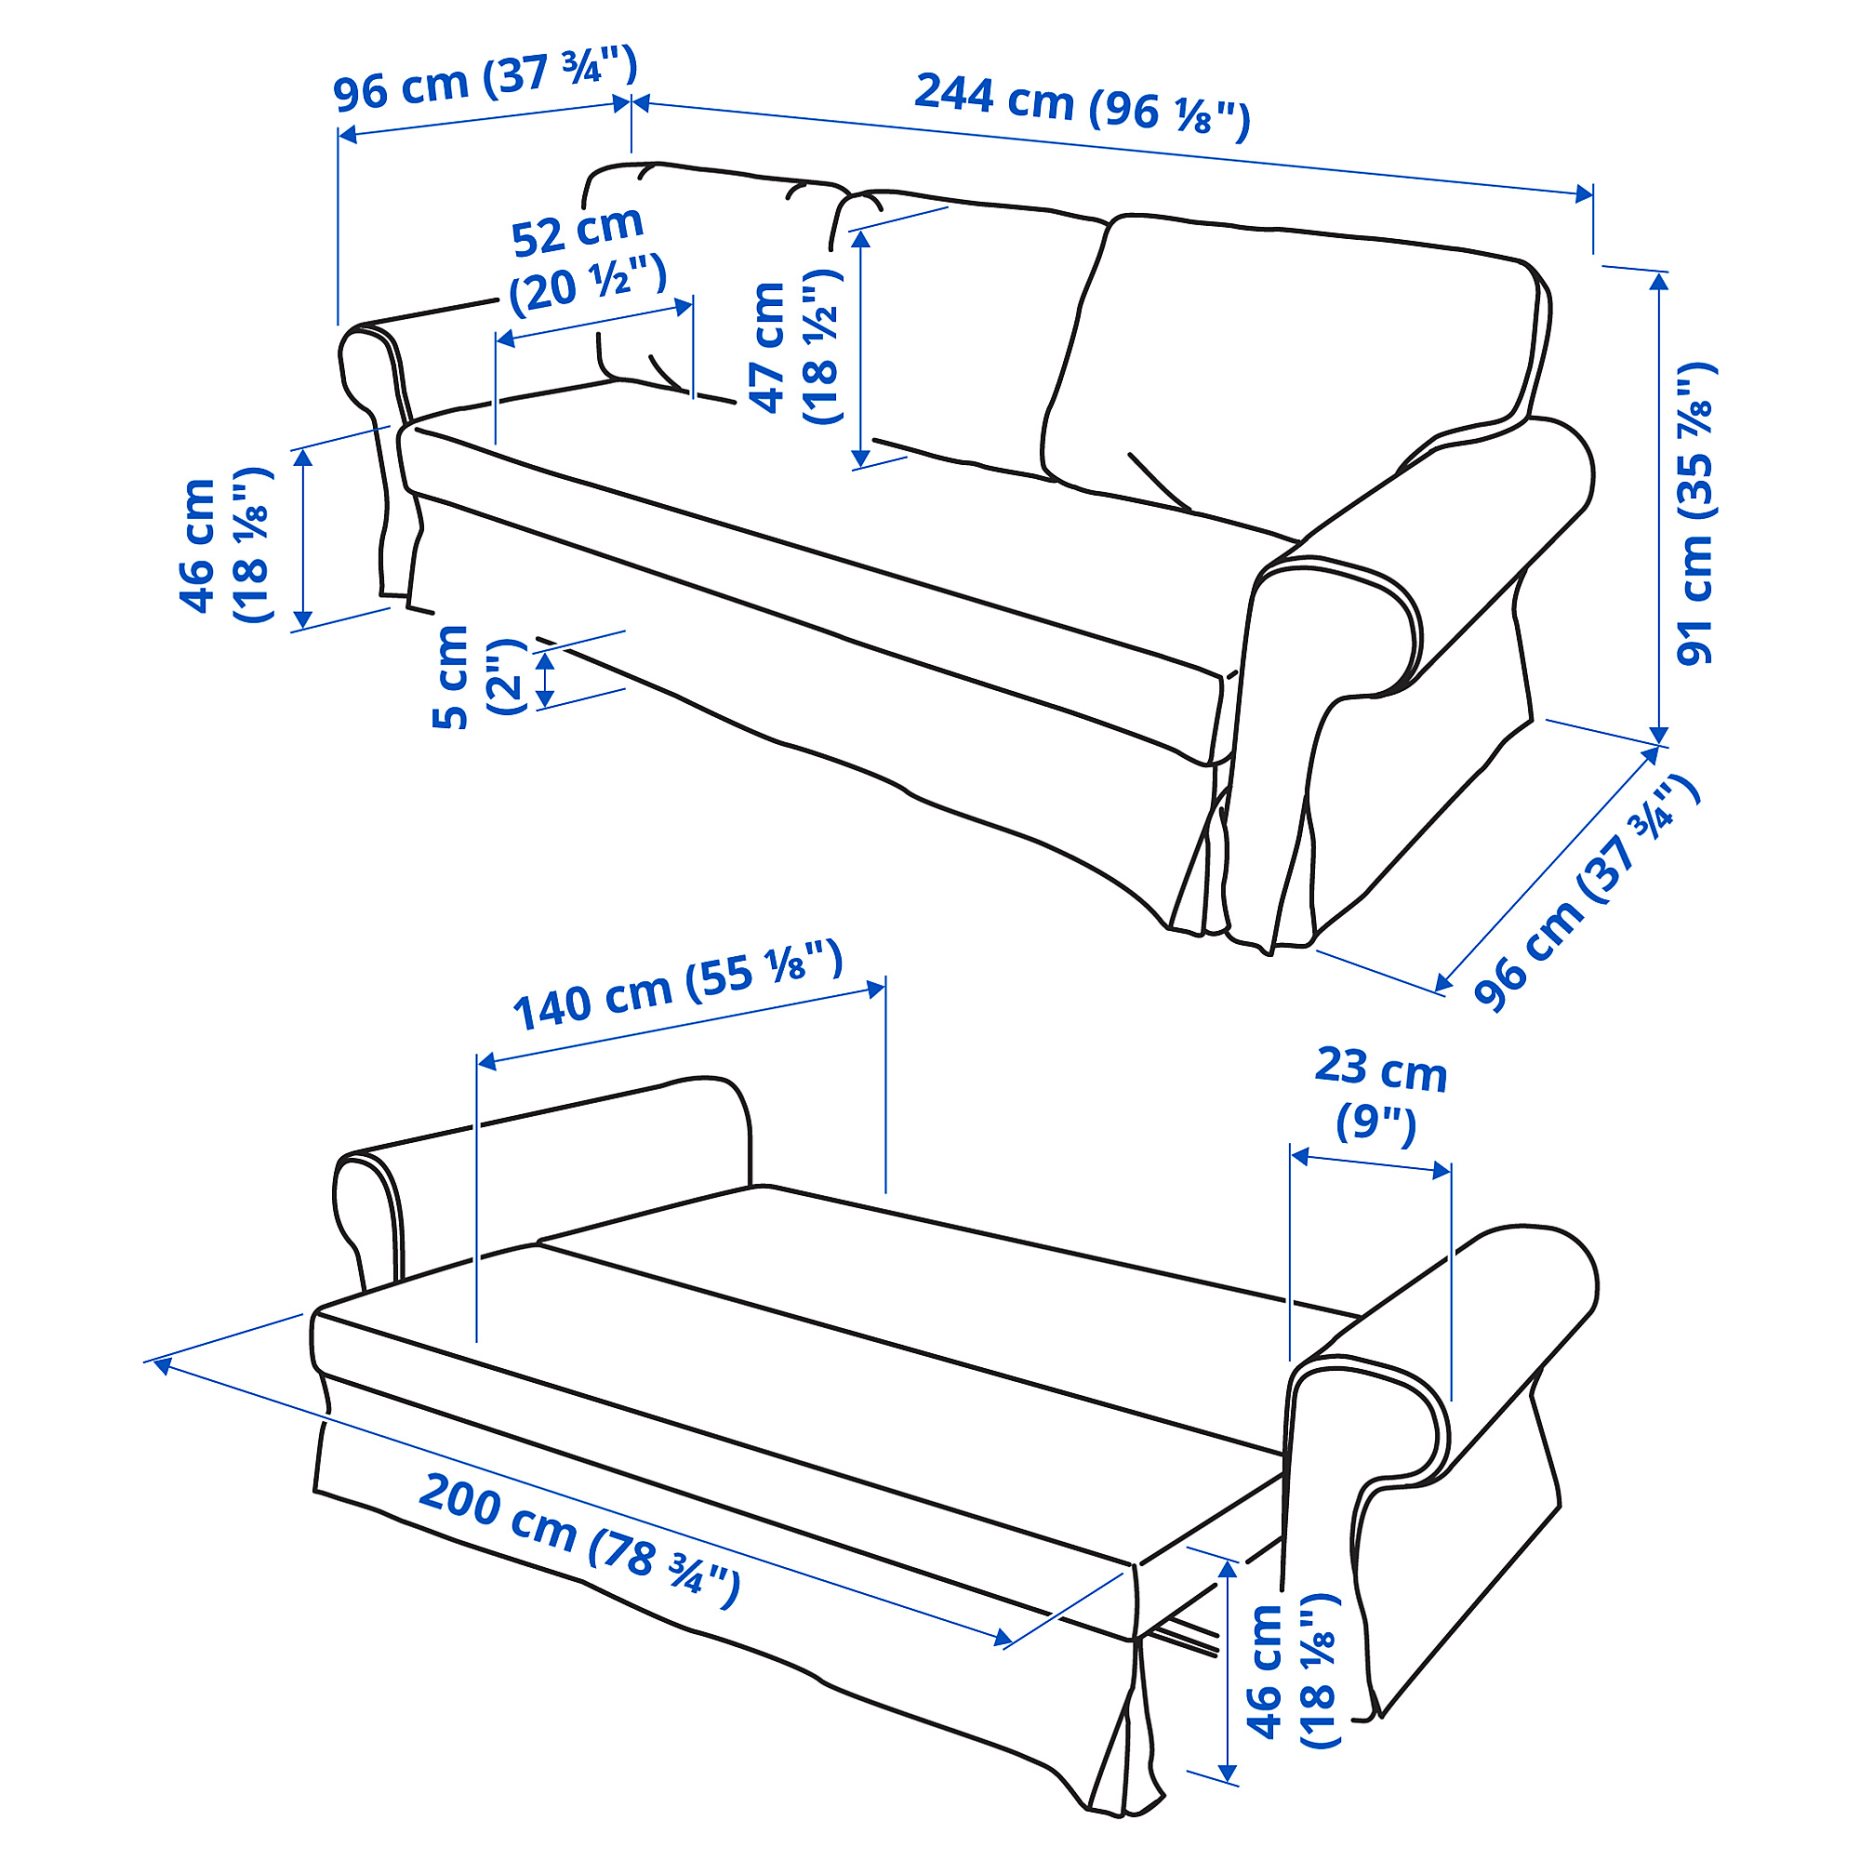 VRETSTORP, 3-seat sofa-bed, 493.201.23